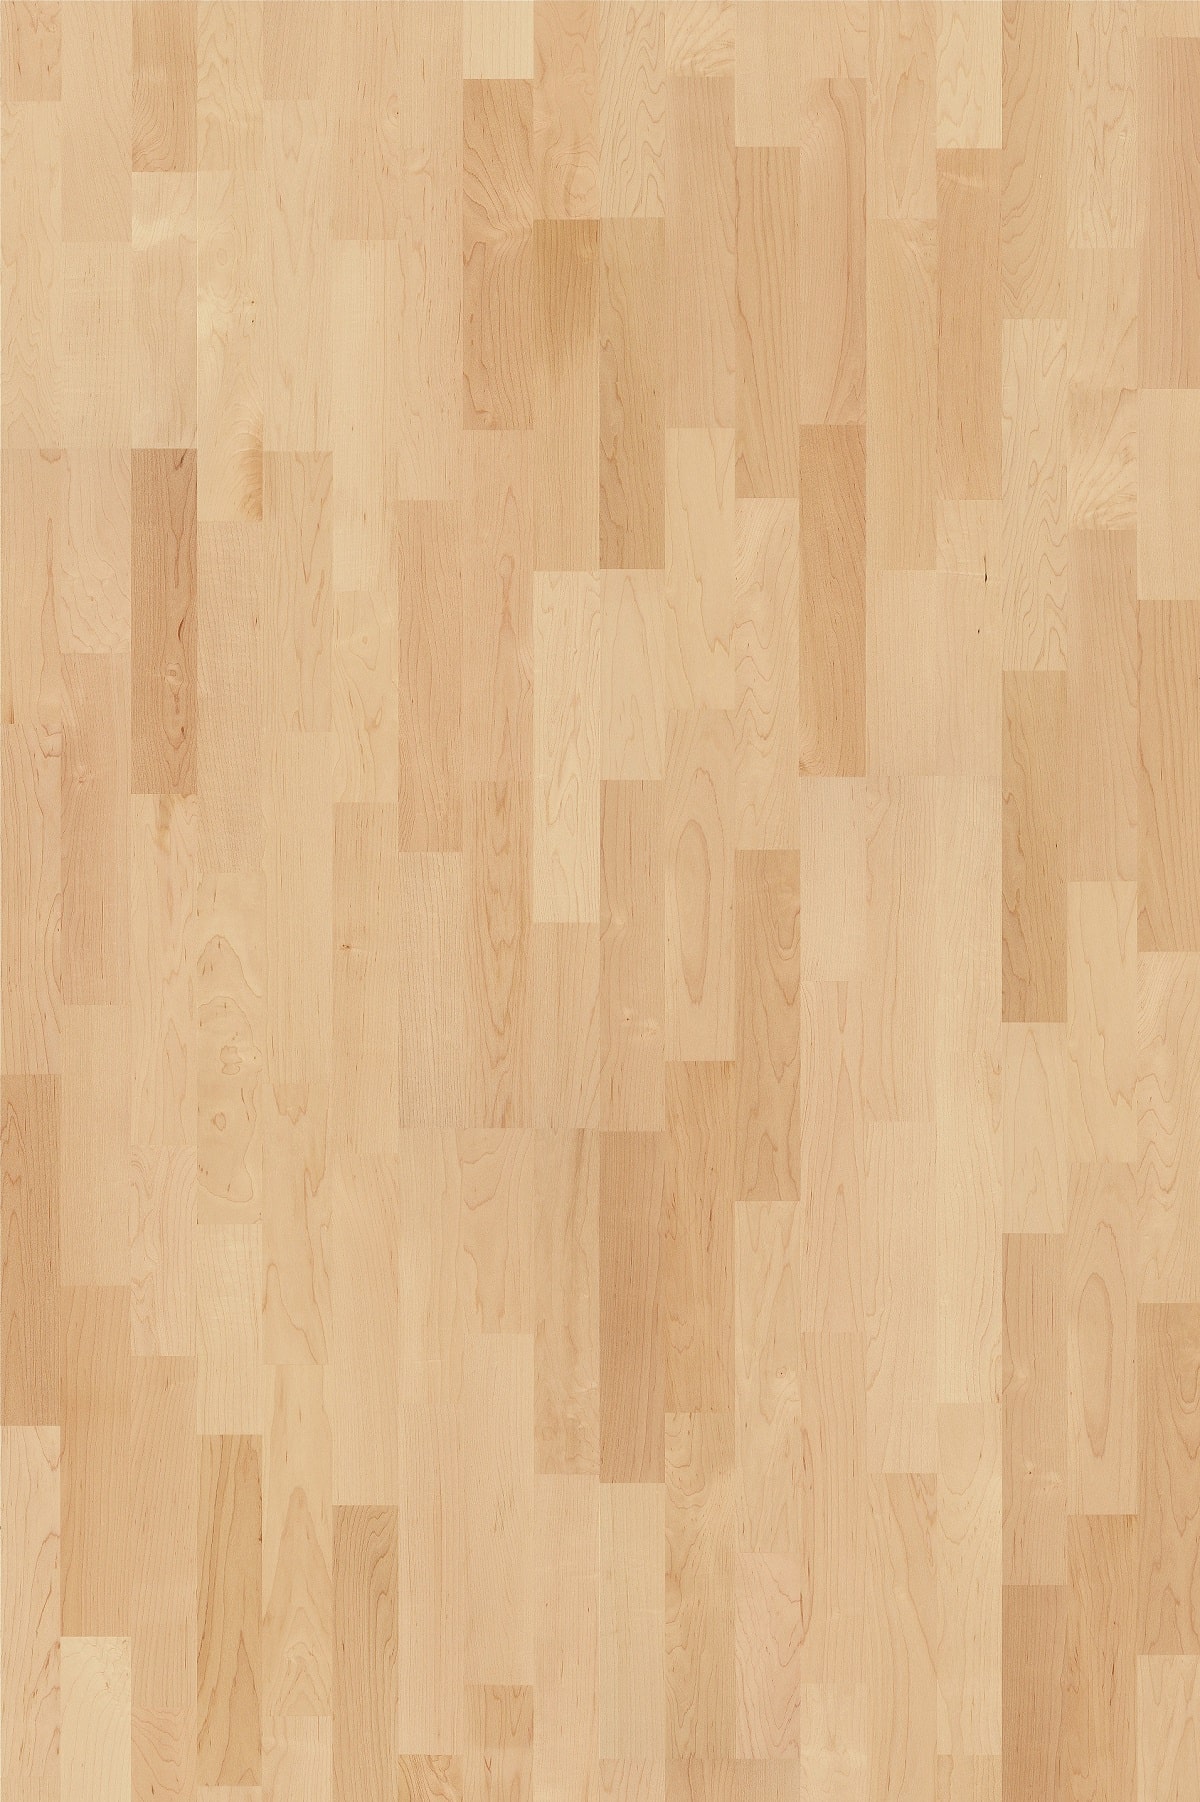 Buy HARD MAPLE TORONTO Online | The Wooden Floor Company